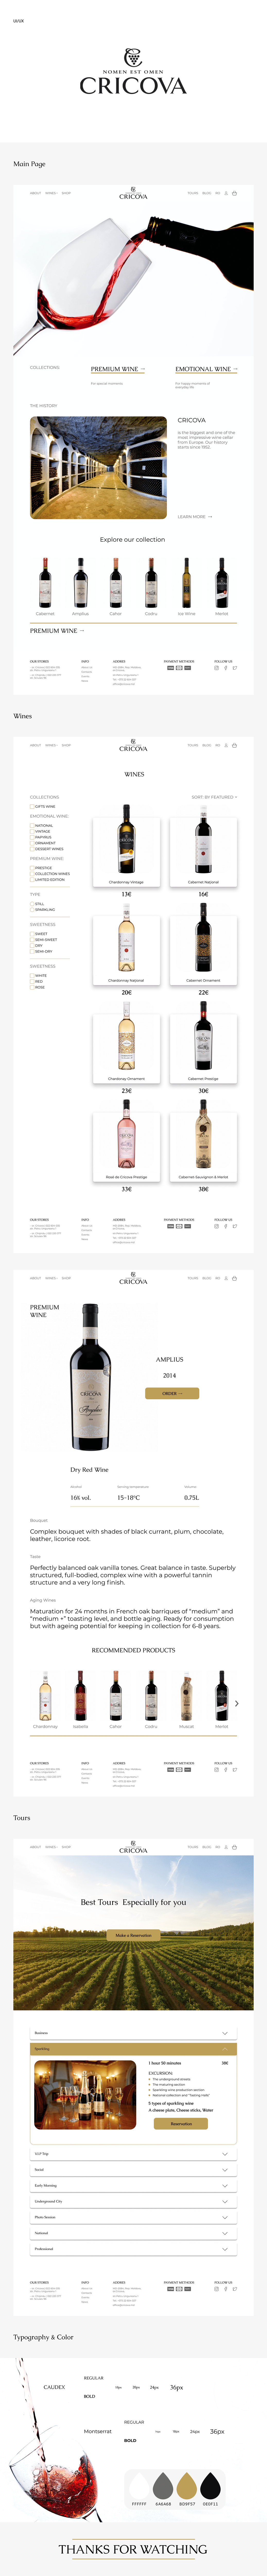 cricova webredesign wine Wines